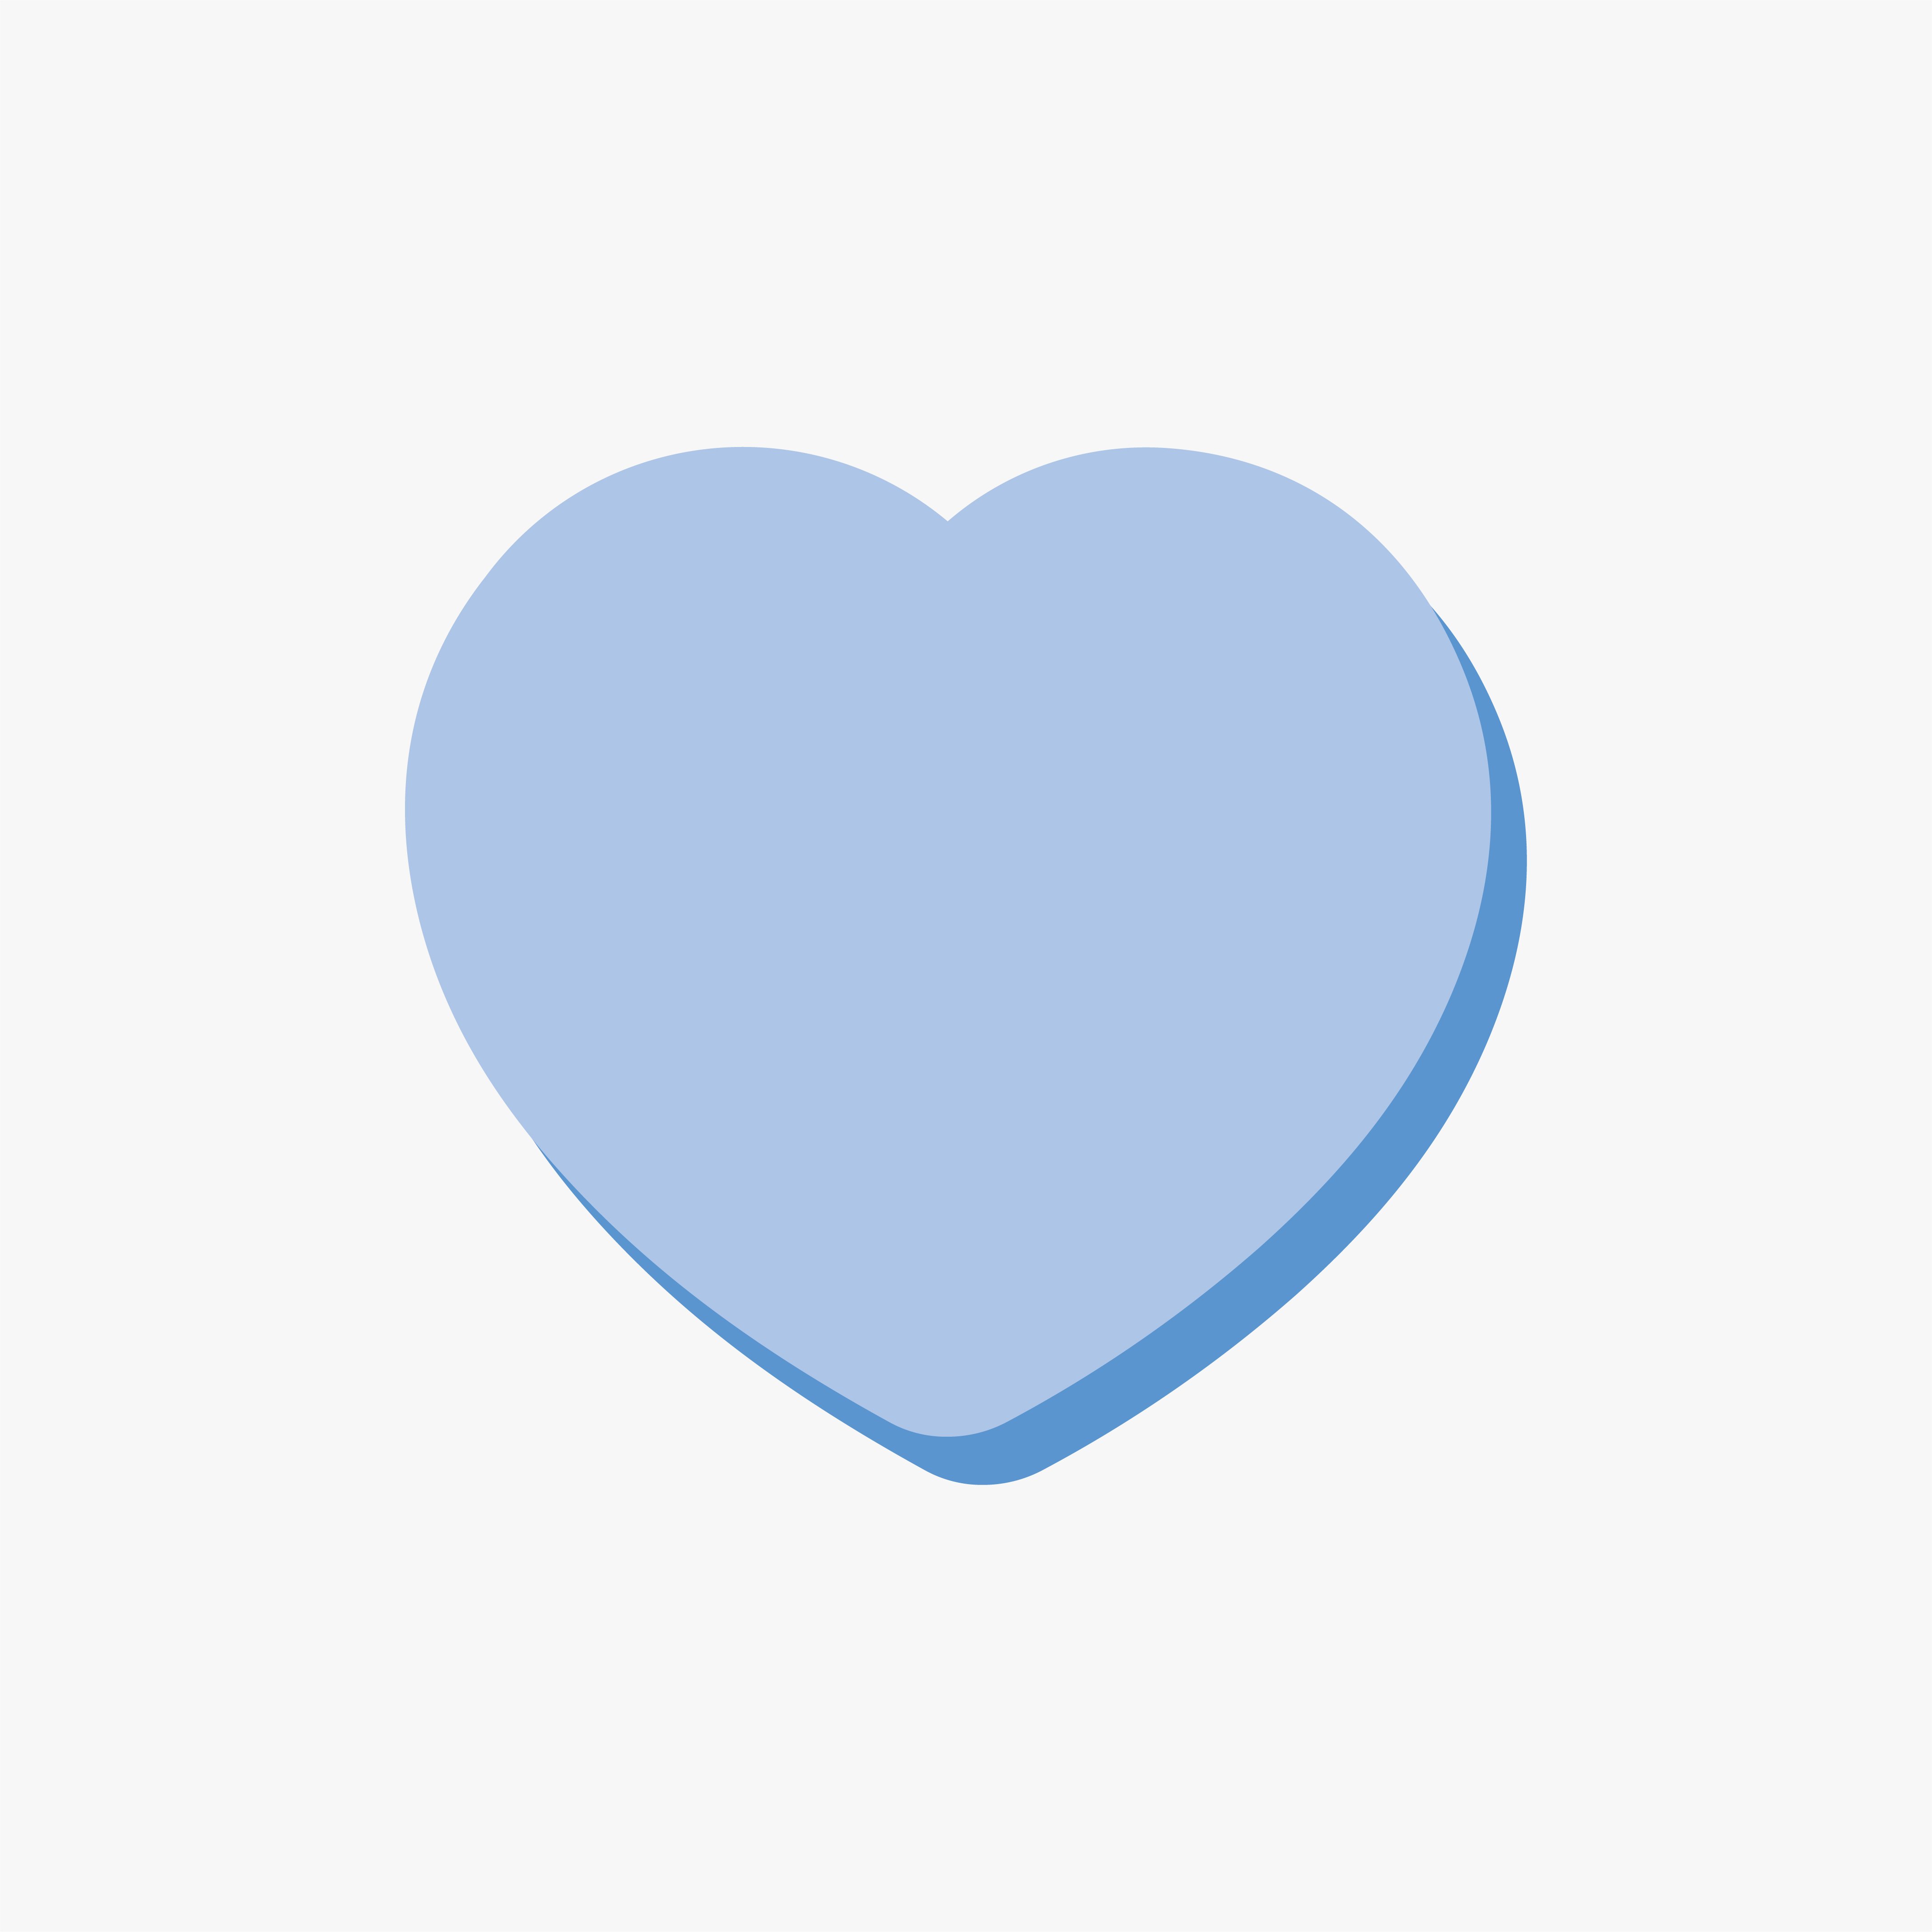 blank blue candy heart